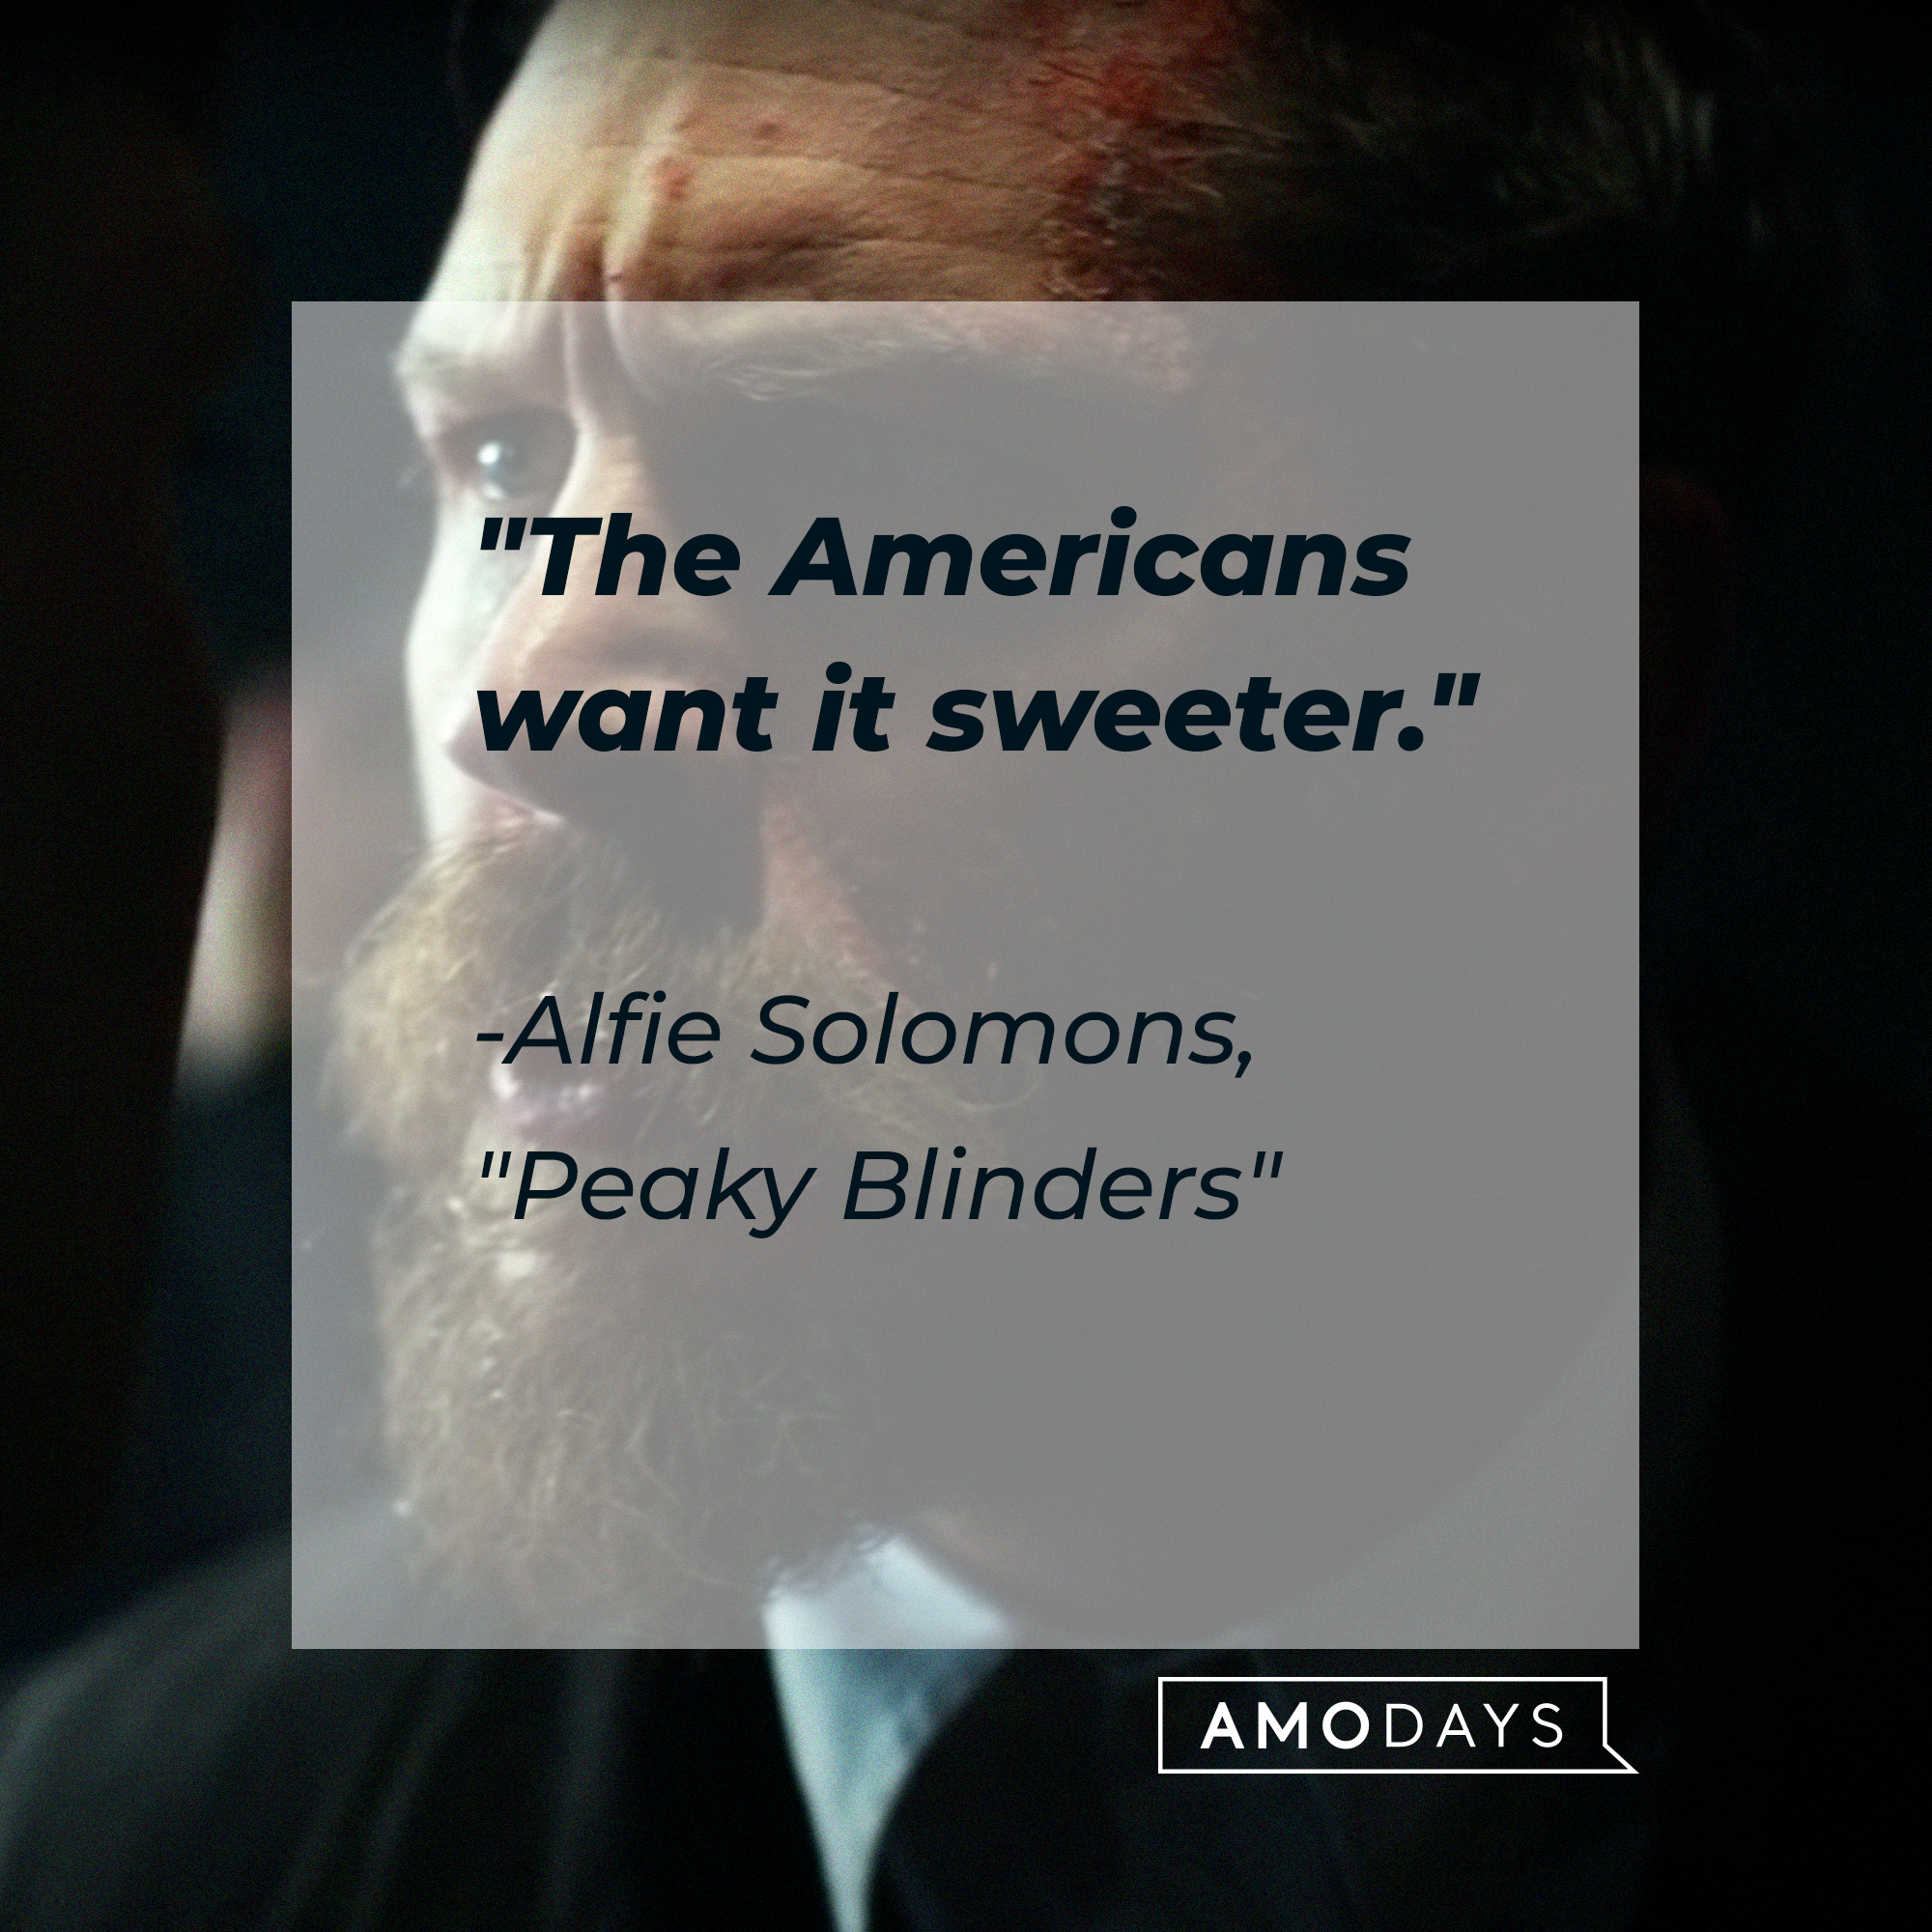 Alfie Solomons’s quote: "The Americans want it sweeter." | Source: facebook.com/PeakyBlinders